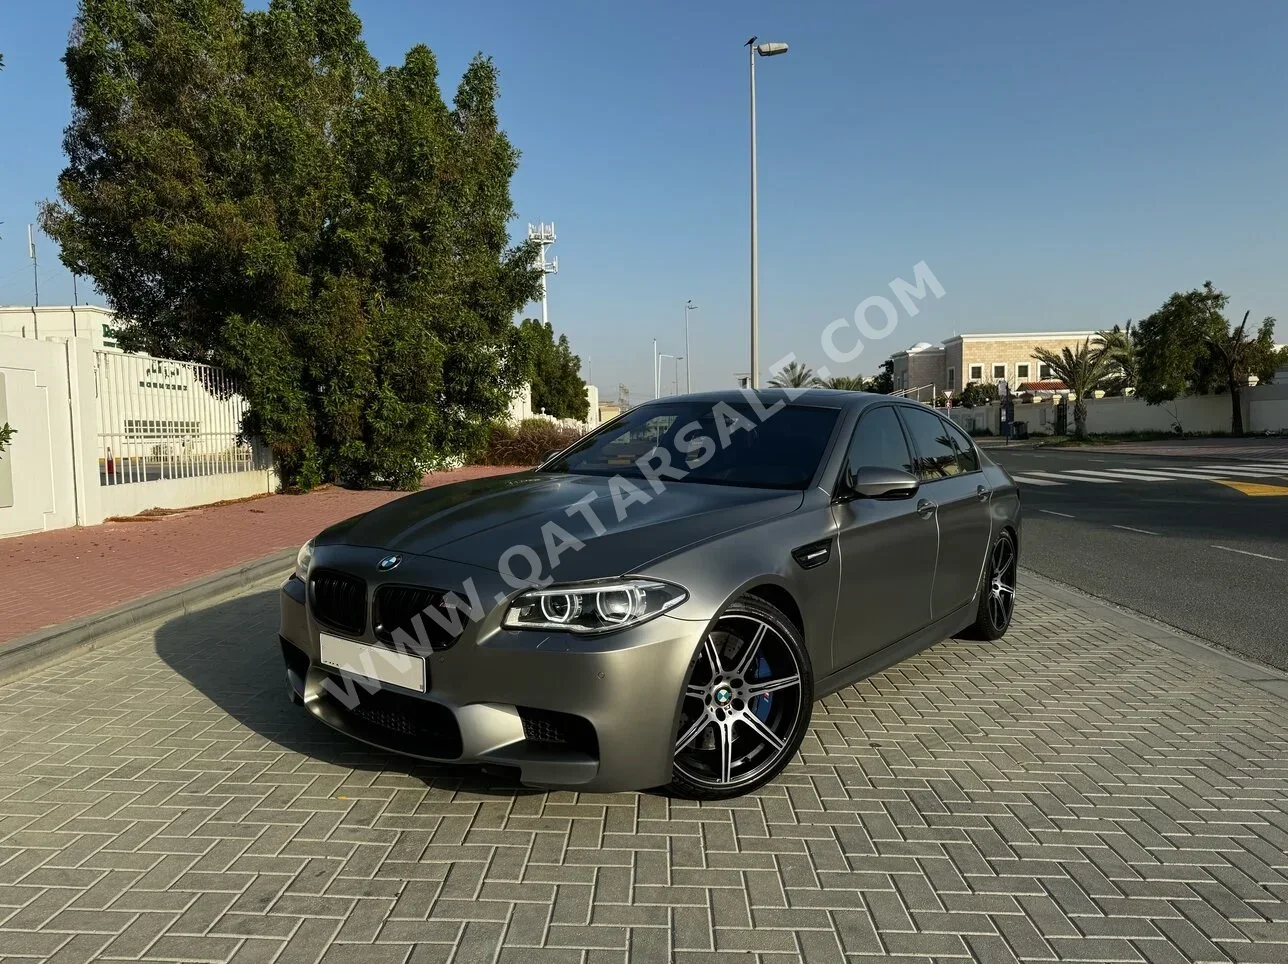 BMW  M-Series  5 Jahre Edition  2015  Automatic  39,500 Km  8 Cylinder  Rear Wheel Drive (RWD)  Sedan  Gray Matte